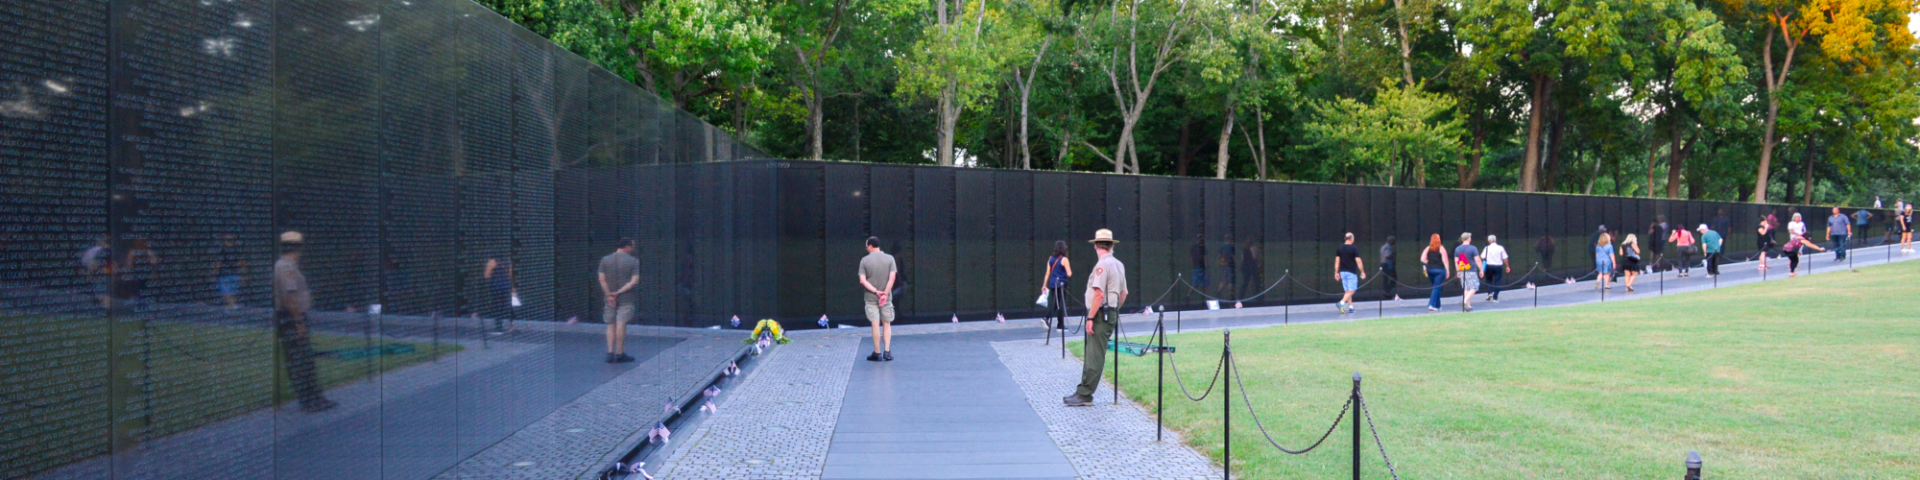 Vietnam Veterans Memorial Washington D.C.